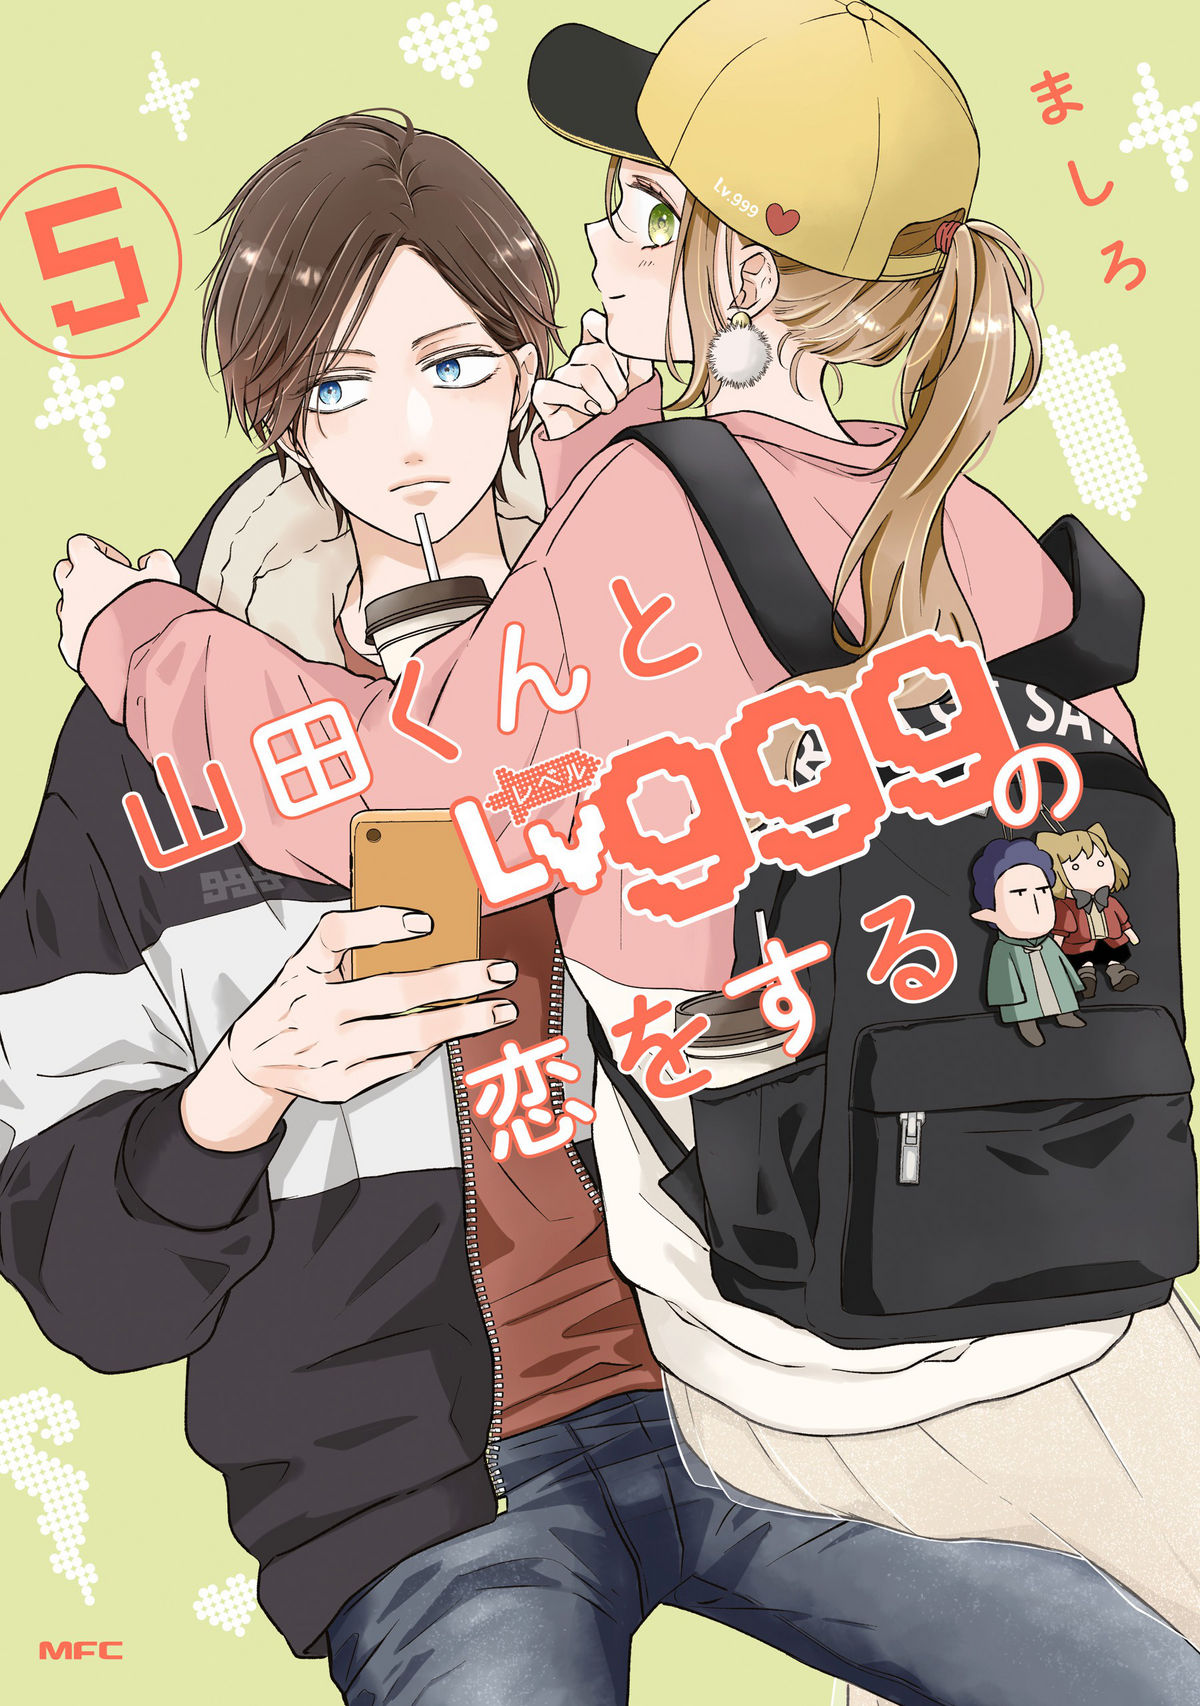 my love story with yamada lv 999 manga